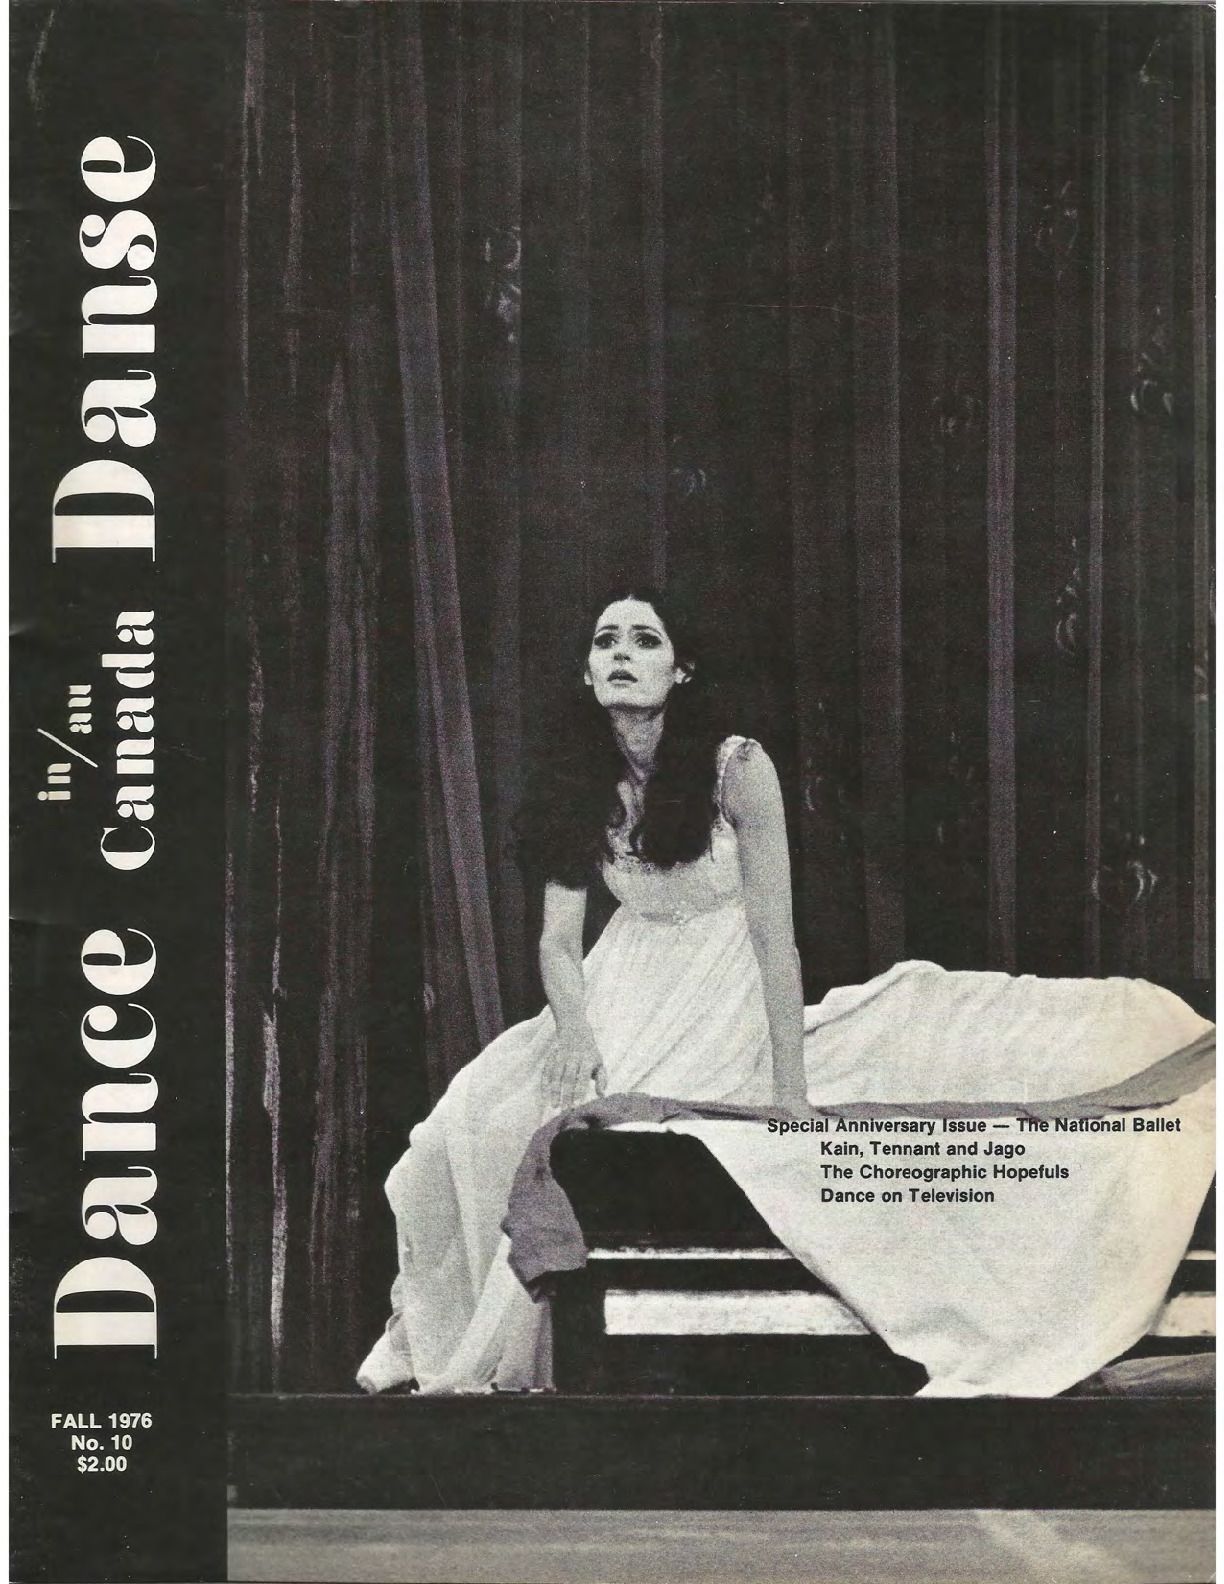 Dance in Canada Magazine No 10 Fall 1976 compressed.pdf